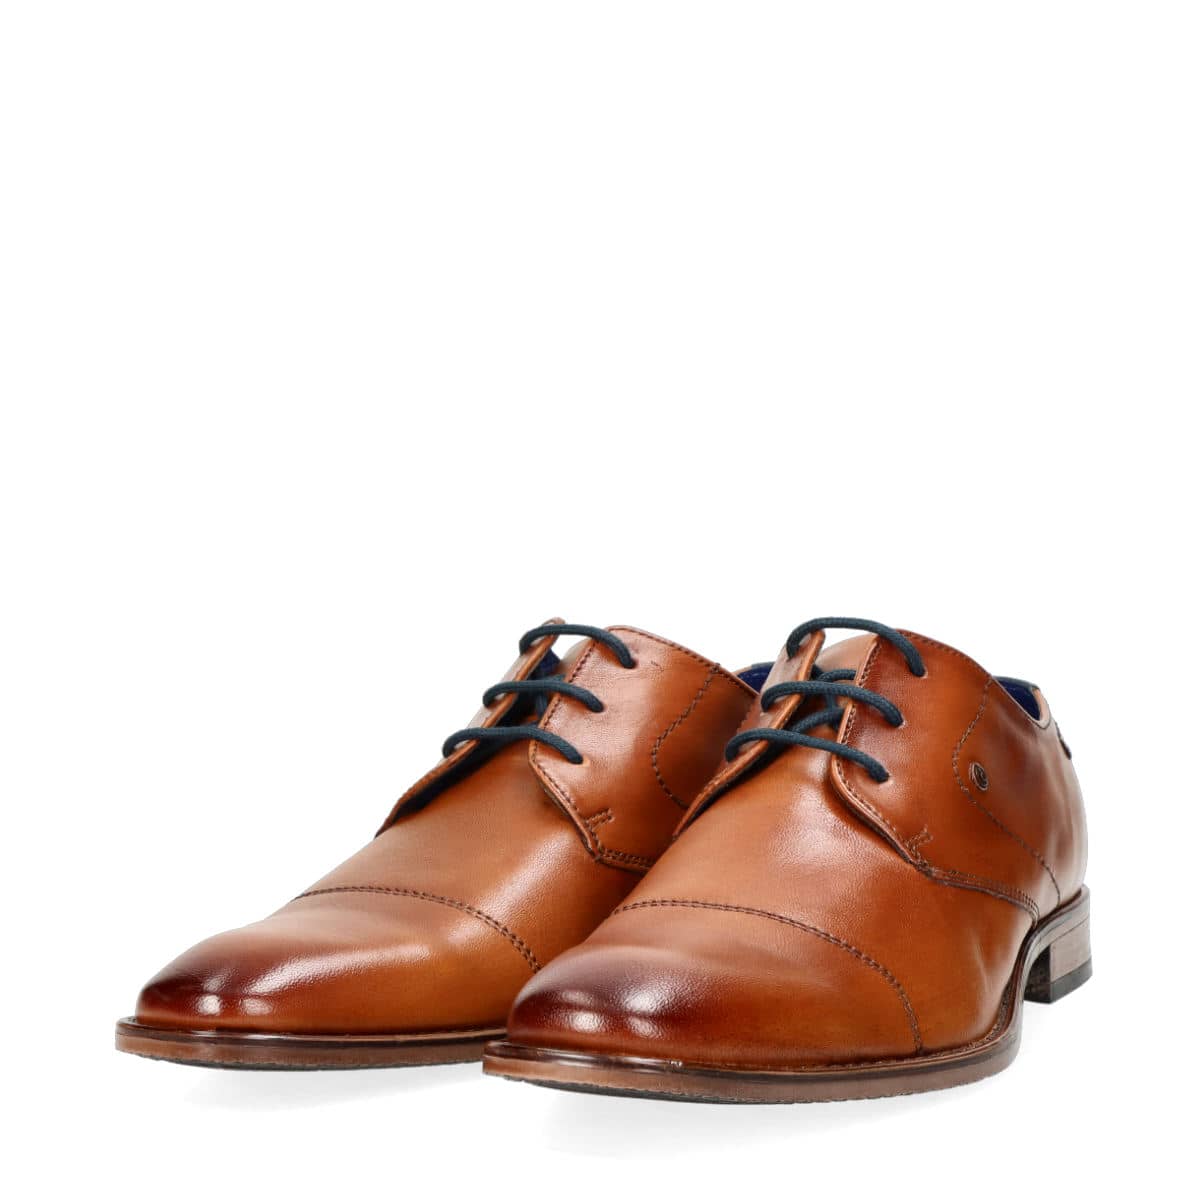 Bugatti men's leather formal shoes - cognac brown